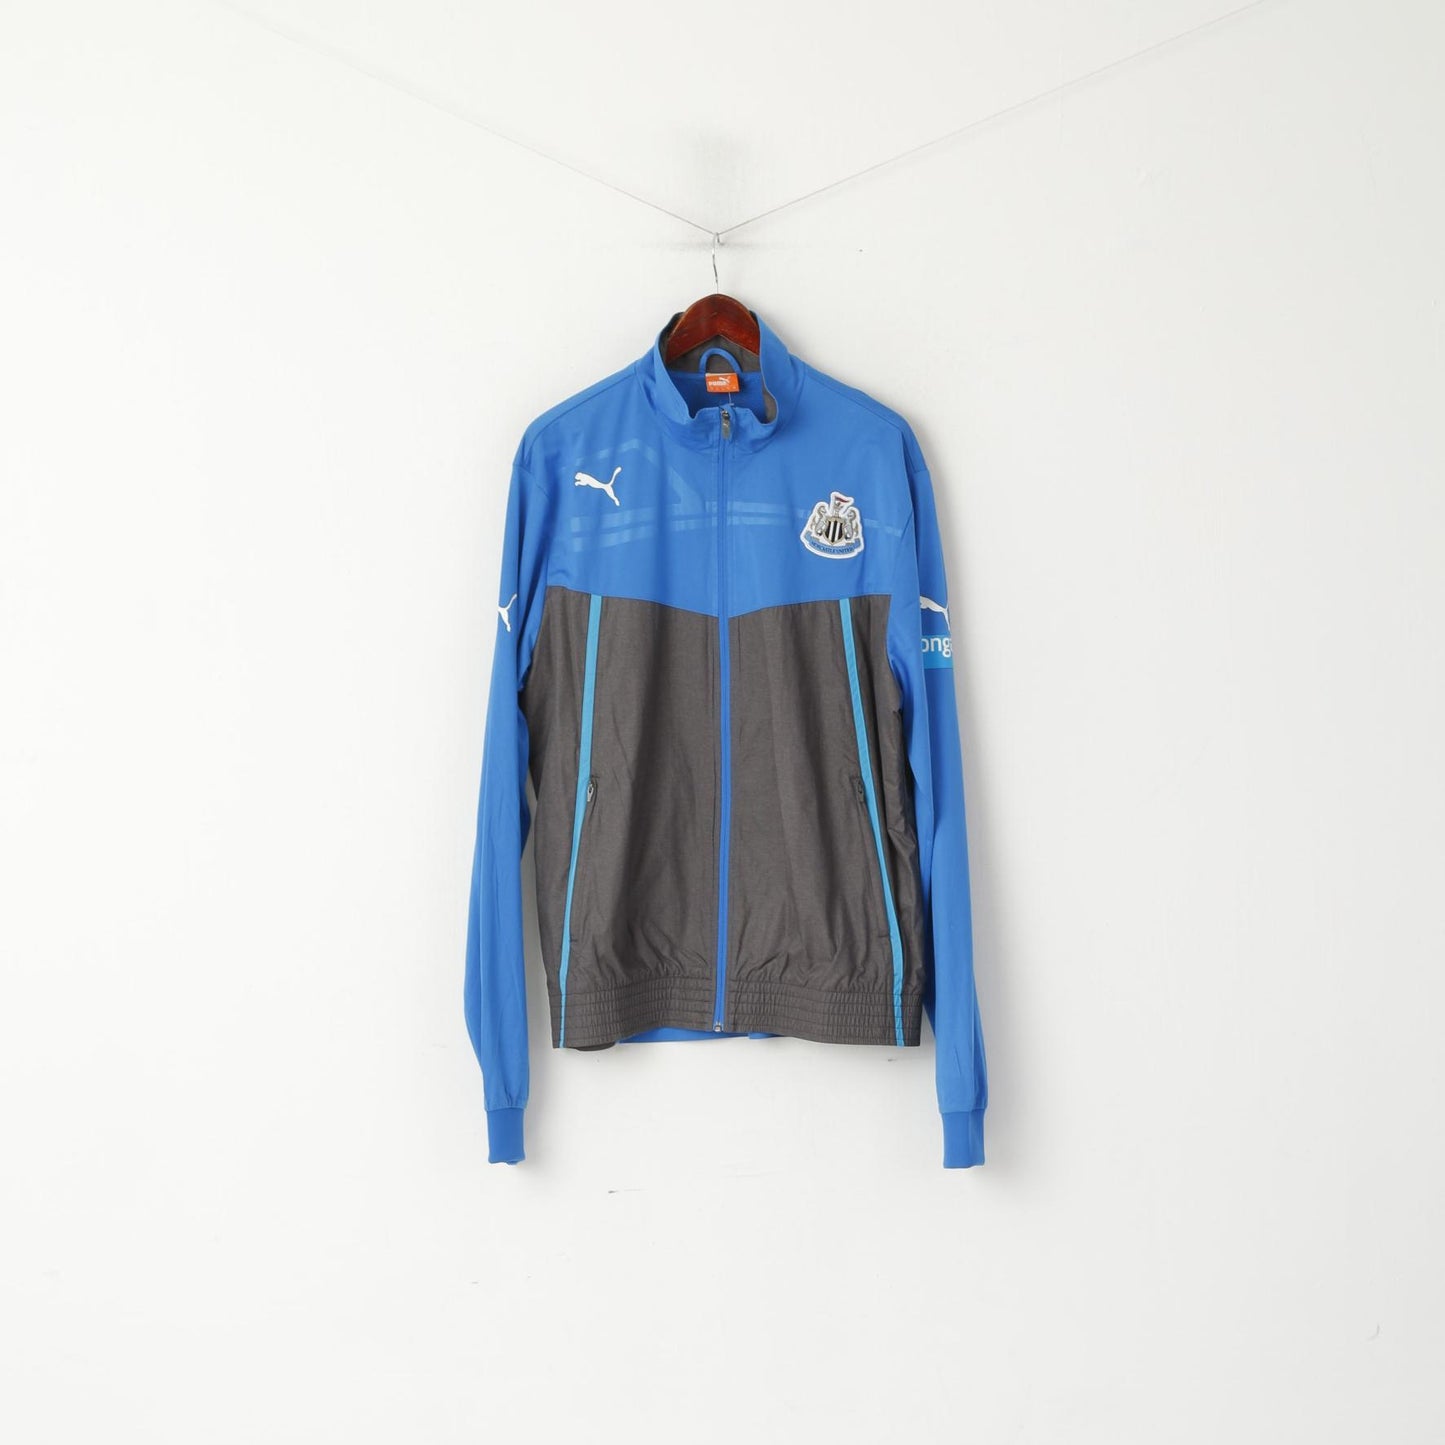 Puma Men XL Jacket Blue Newcastle United Football Club Activewear Zip Up Track Top